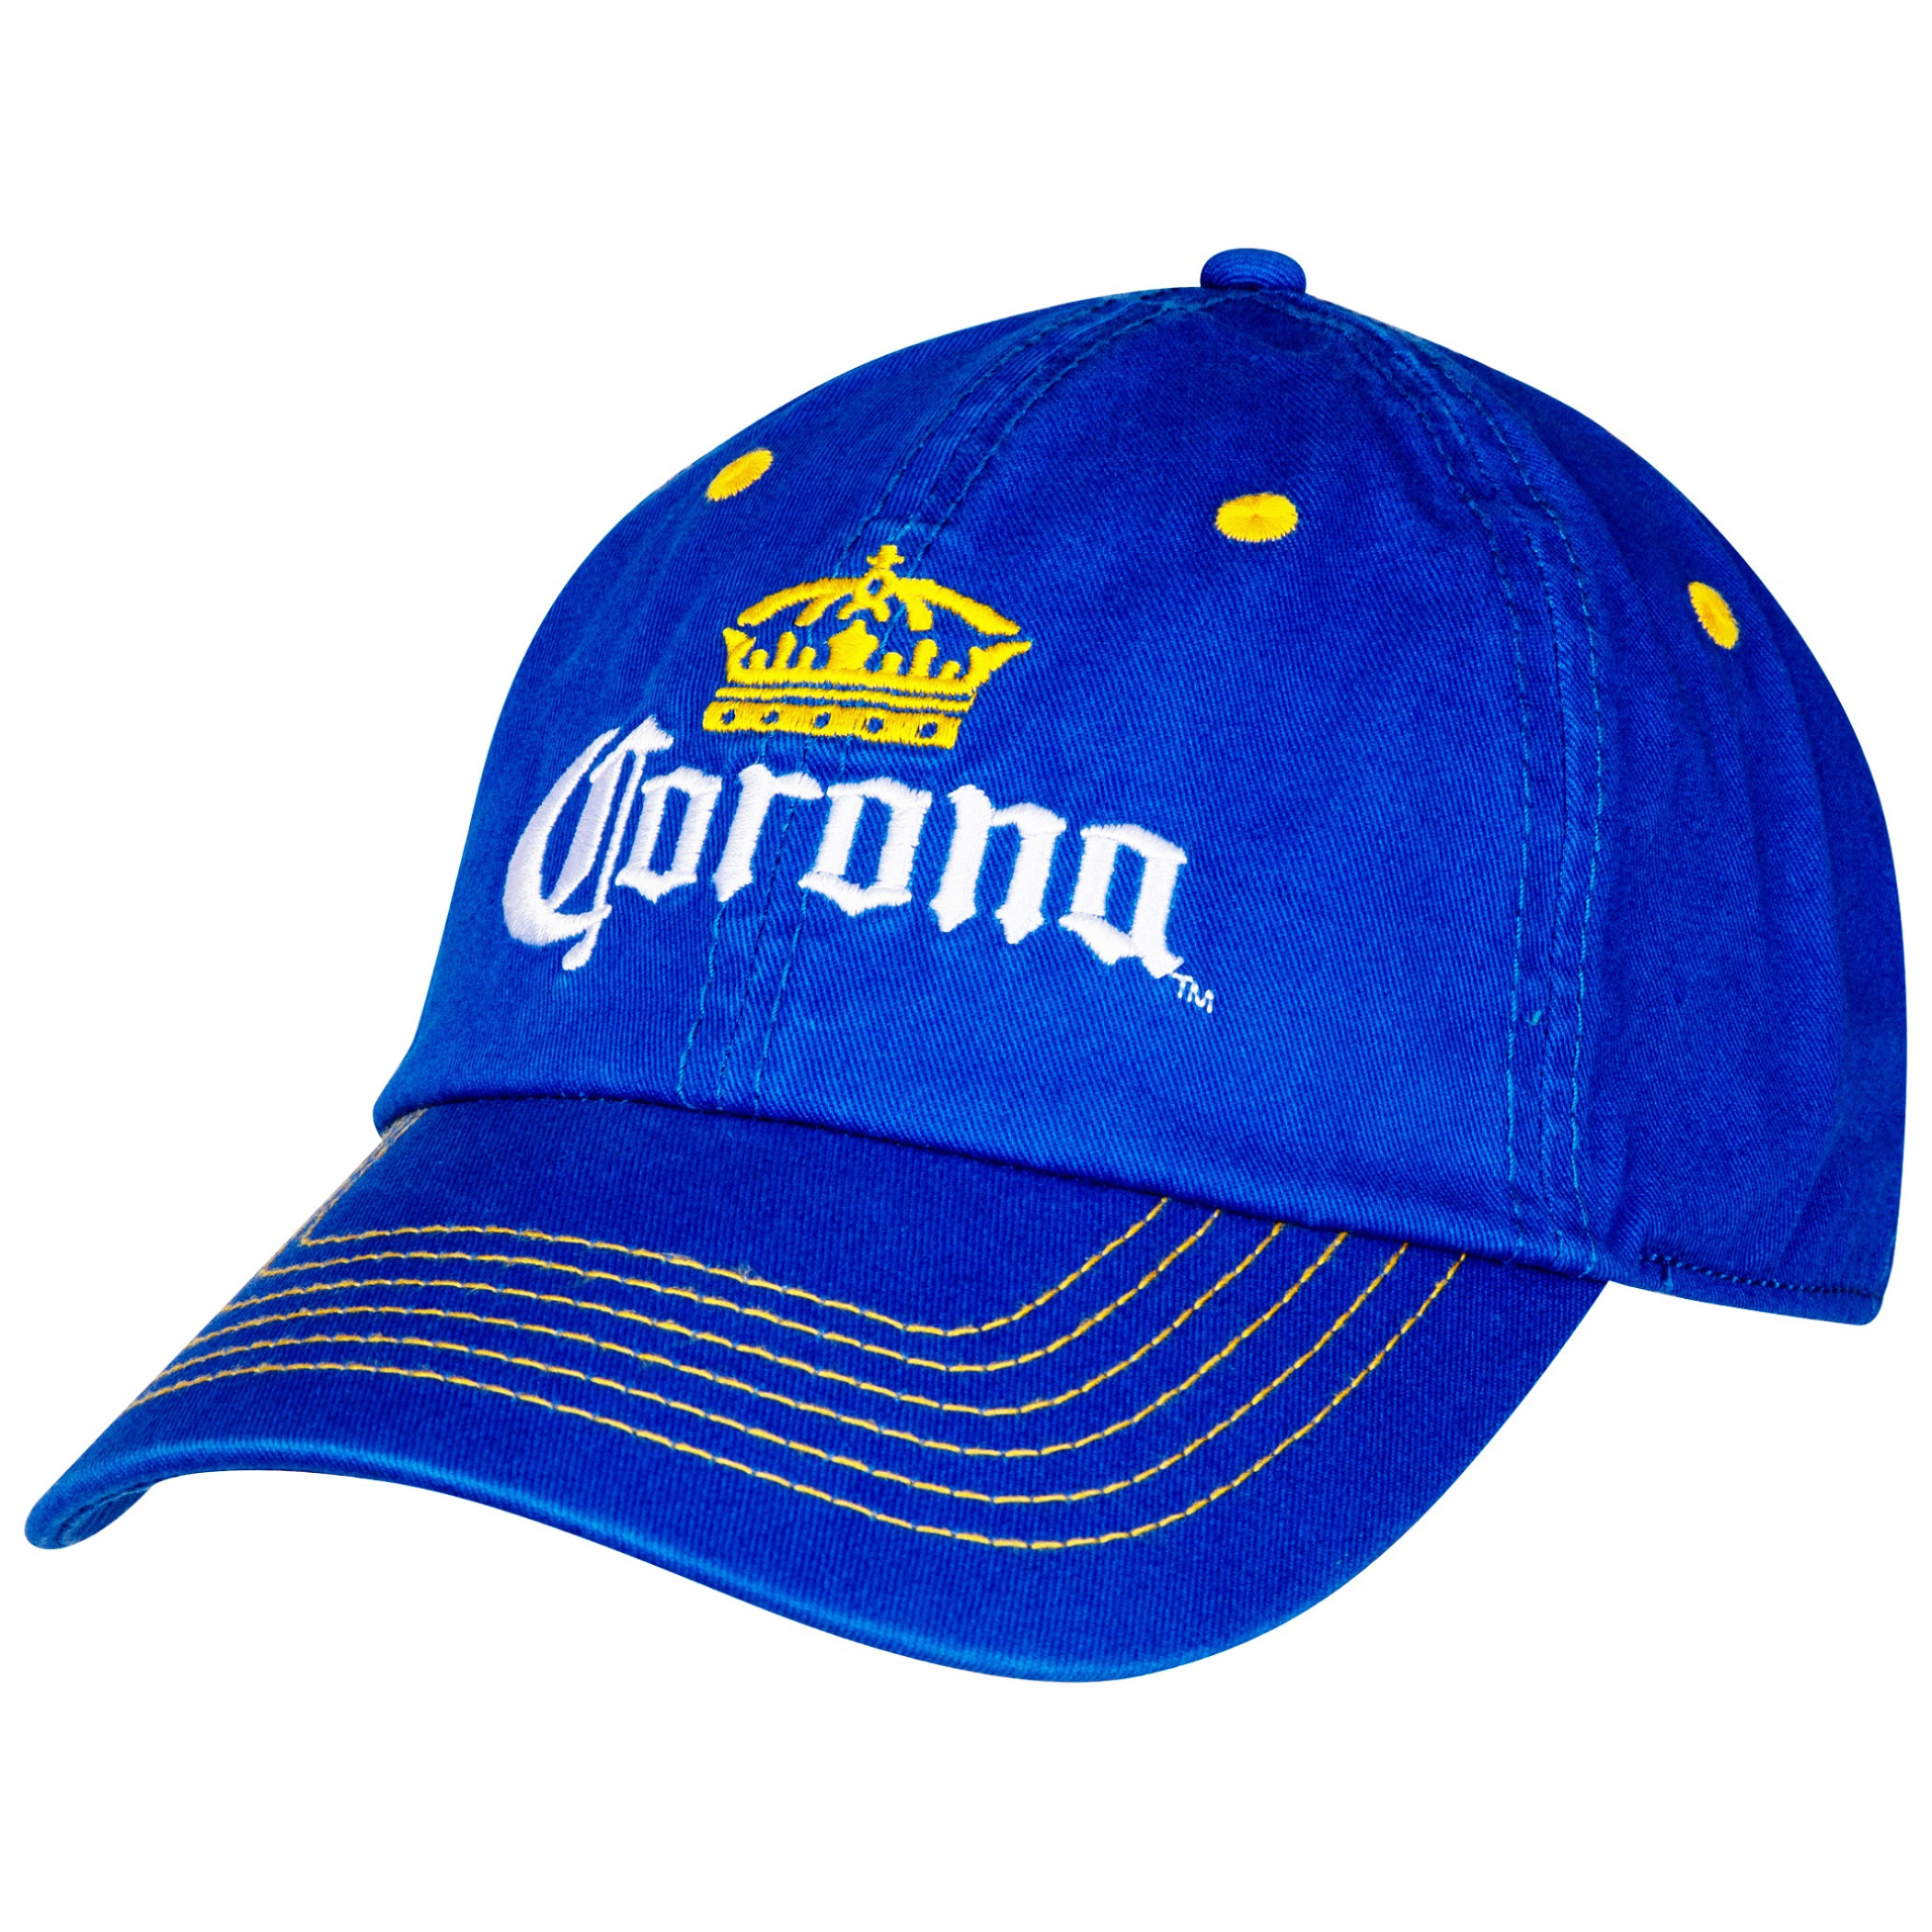 Corona Extra Yellow Stitch Adjustable Strapback Hat